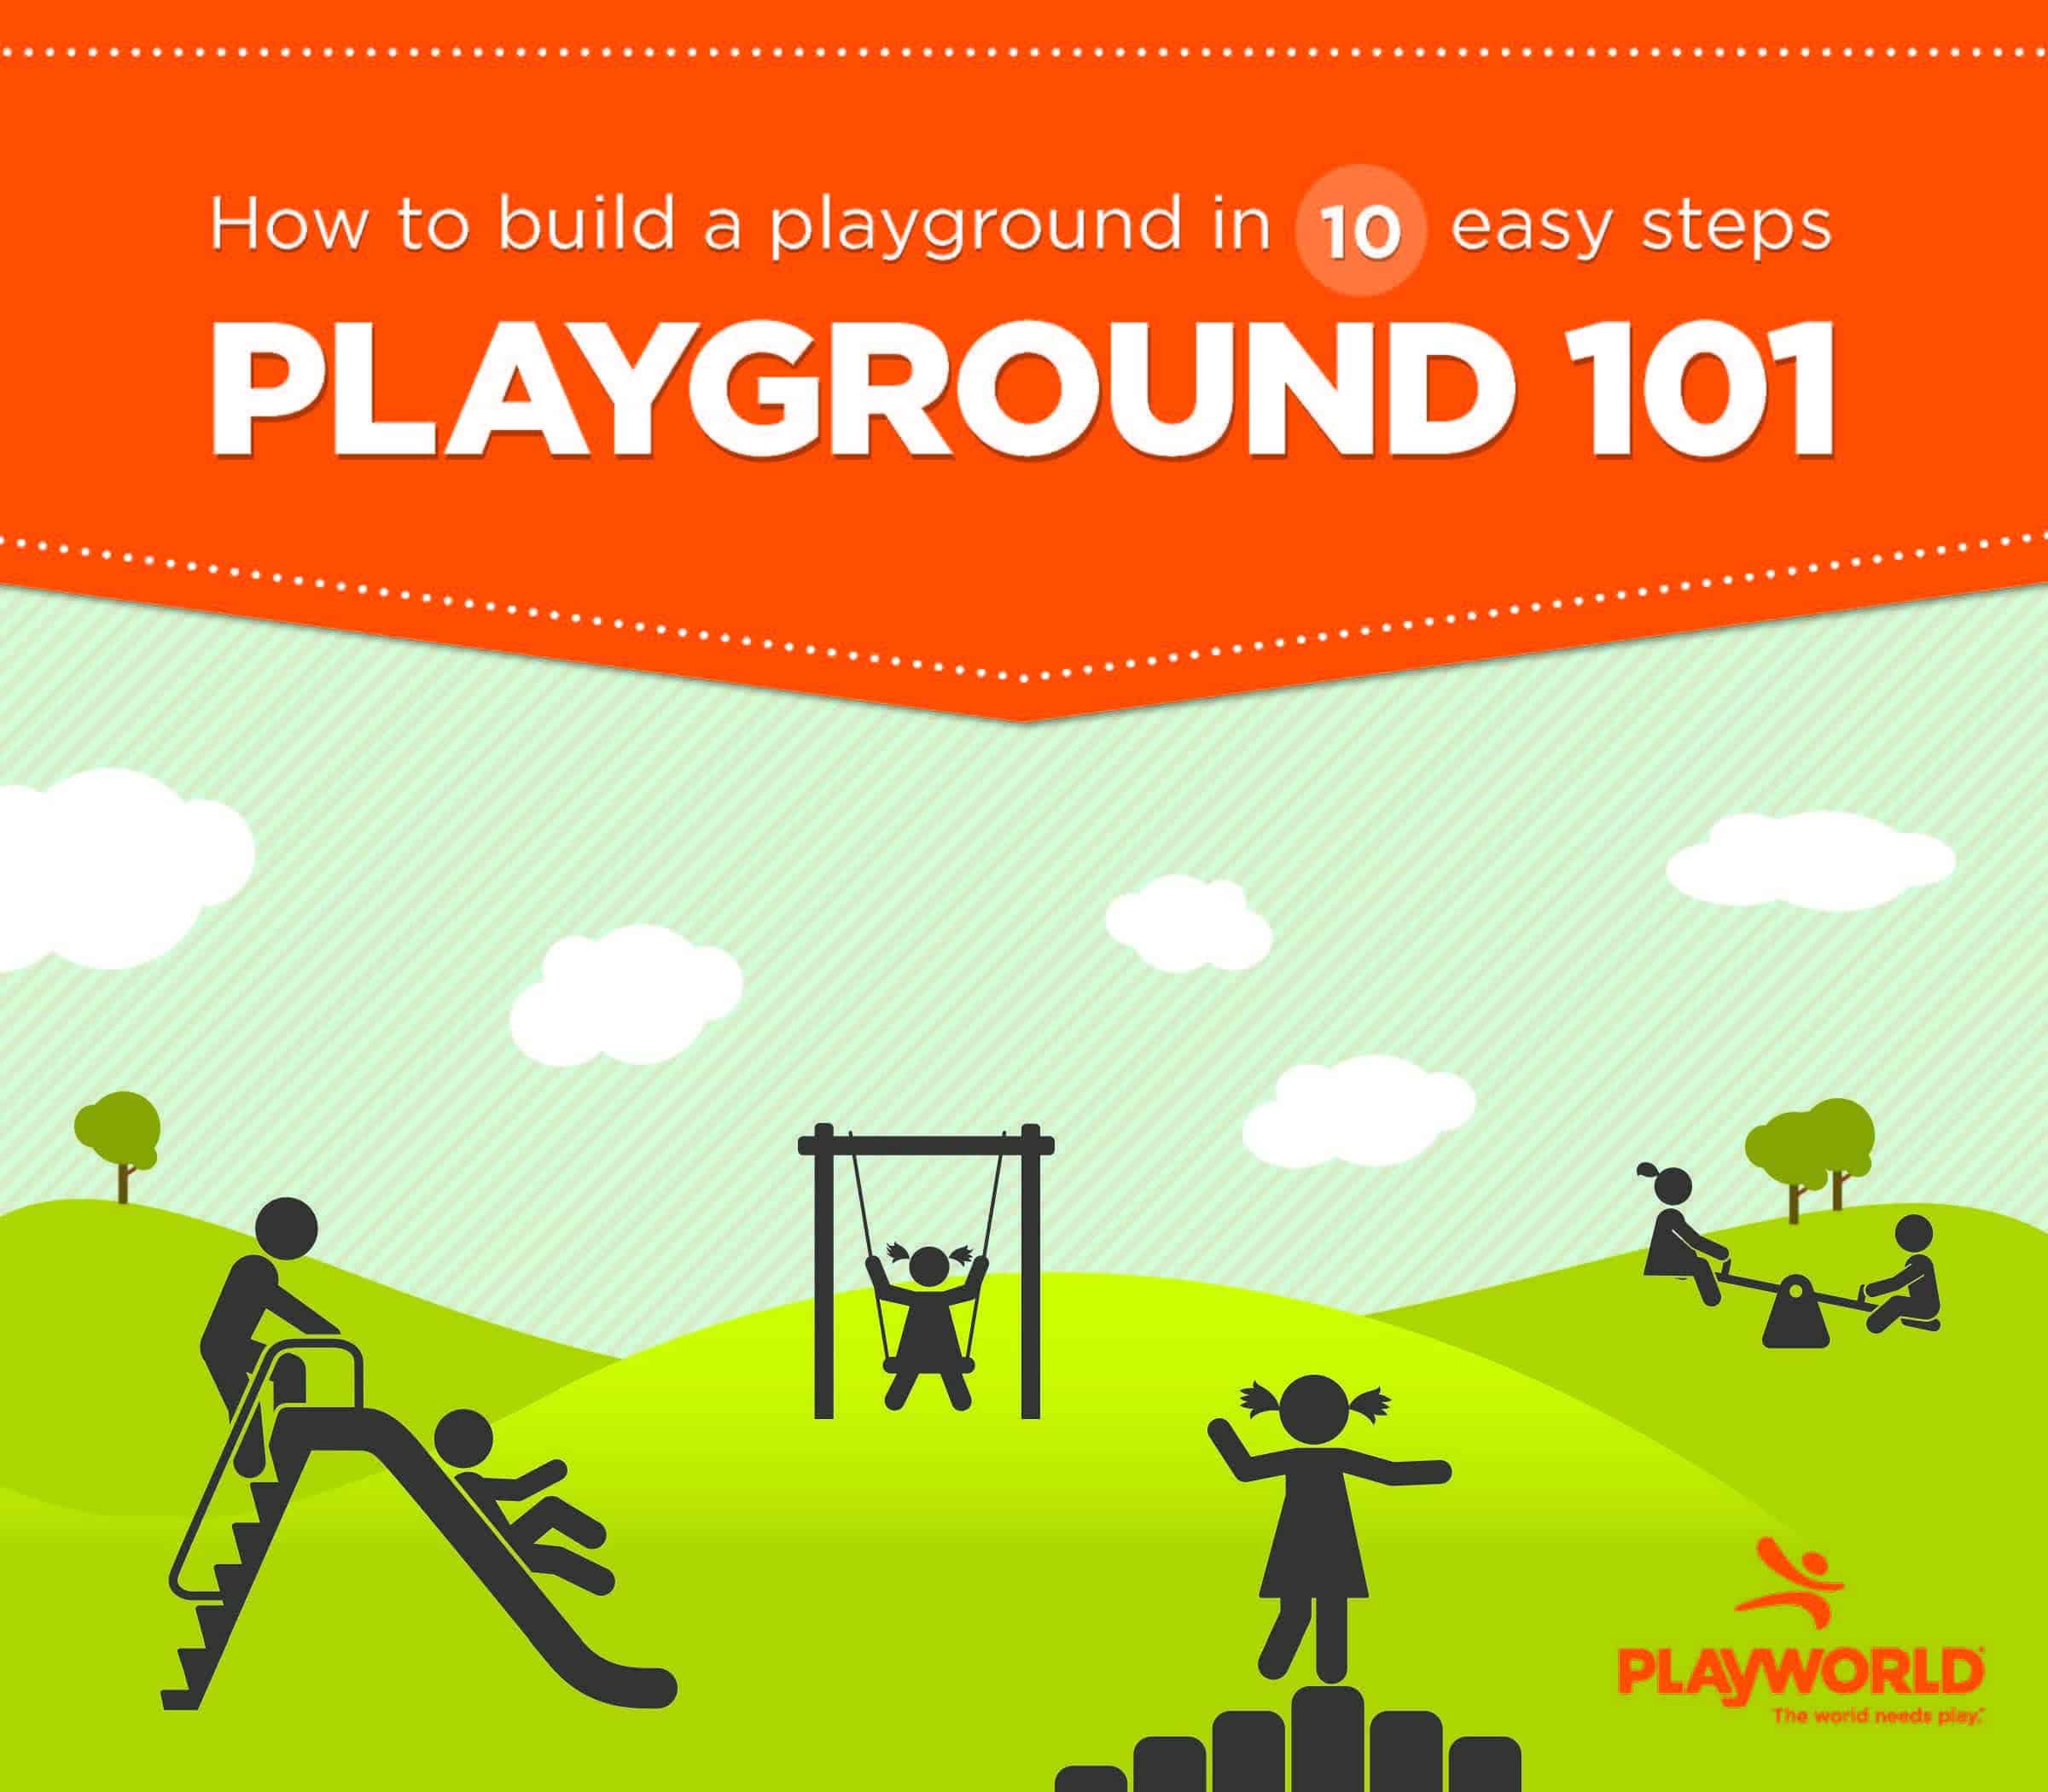 playground 101 guide